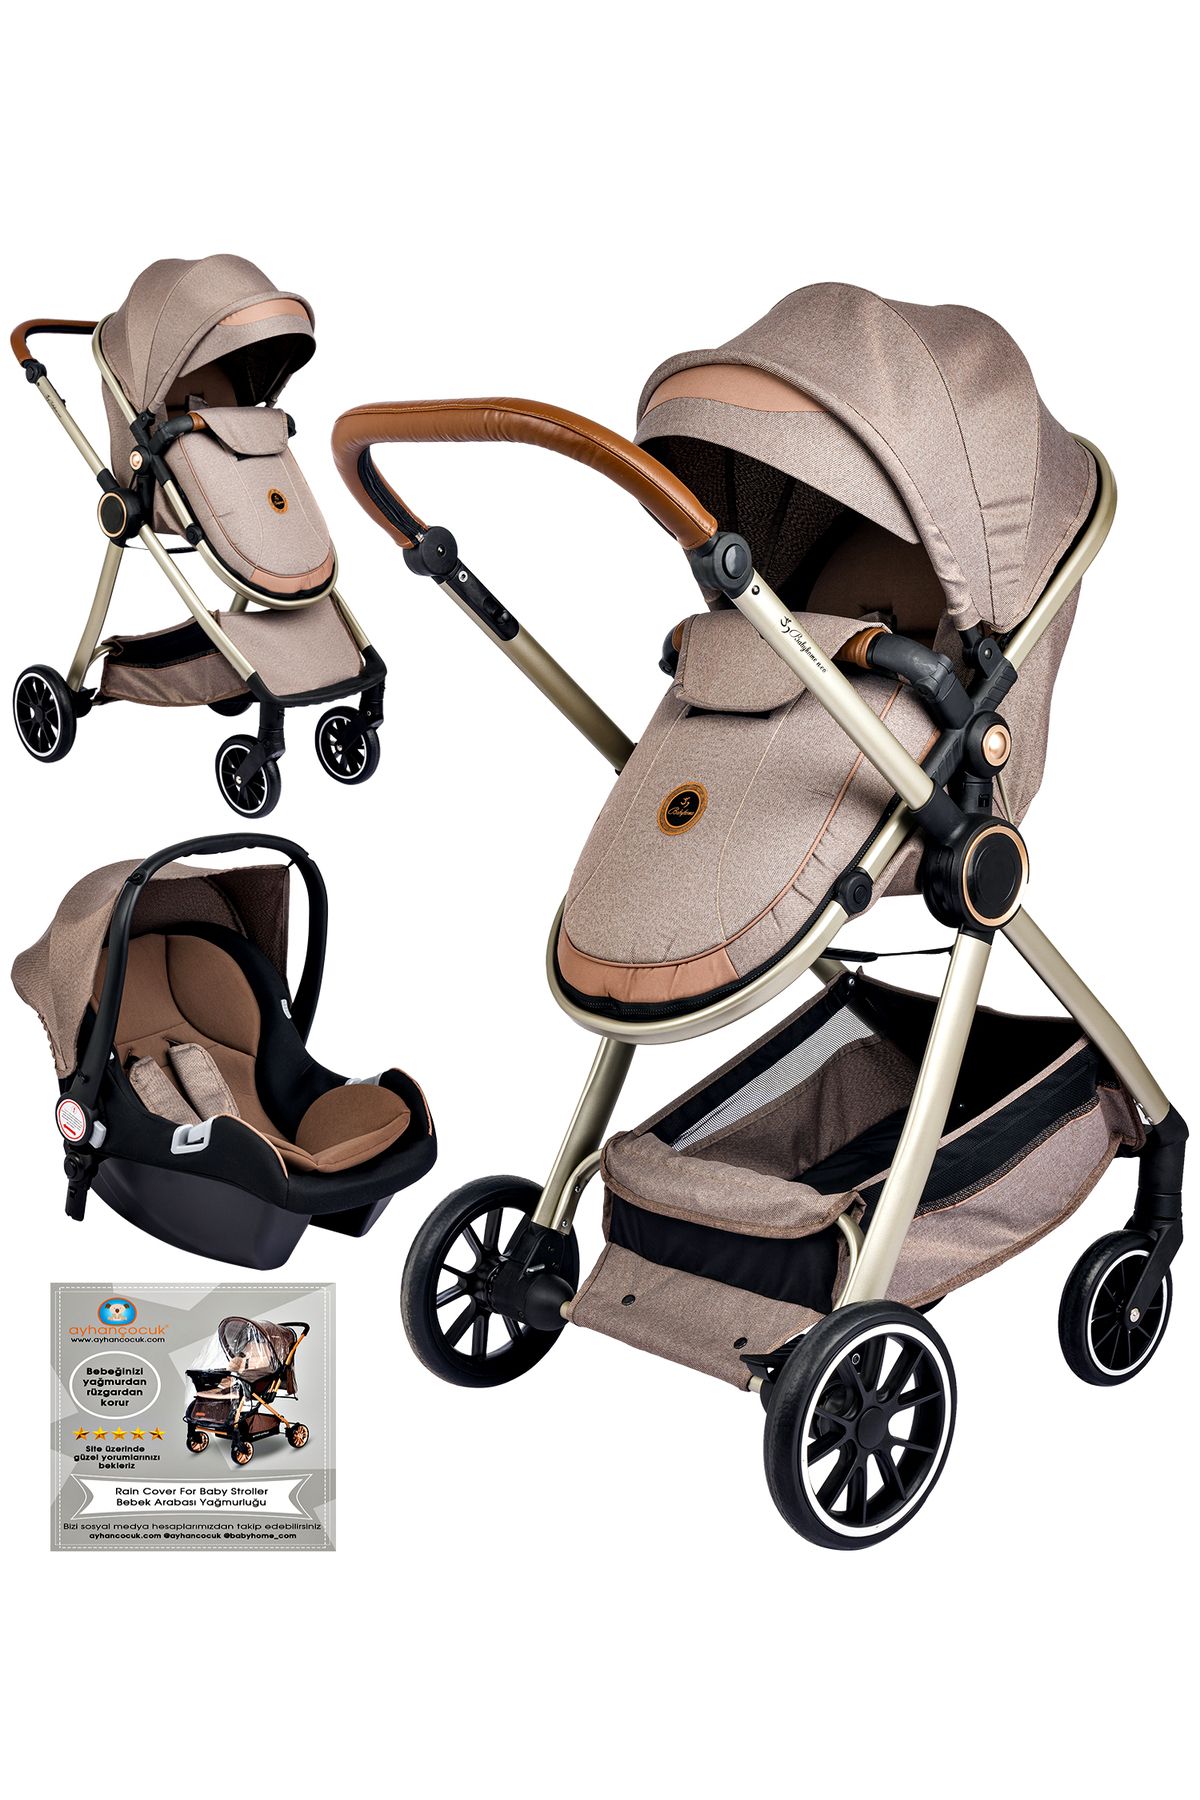 Baby Home 990 Neo 6 In 1 Travel Sistem Bebek Arabası